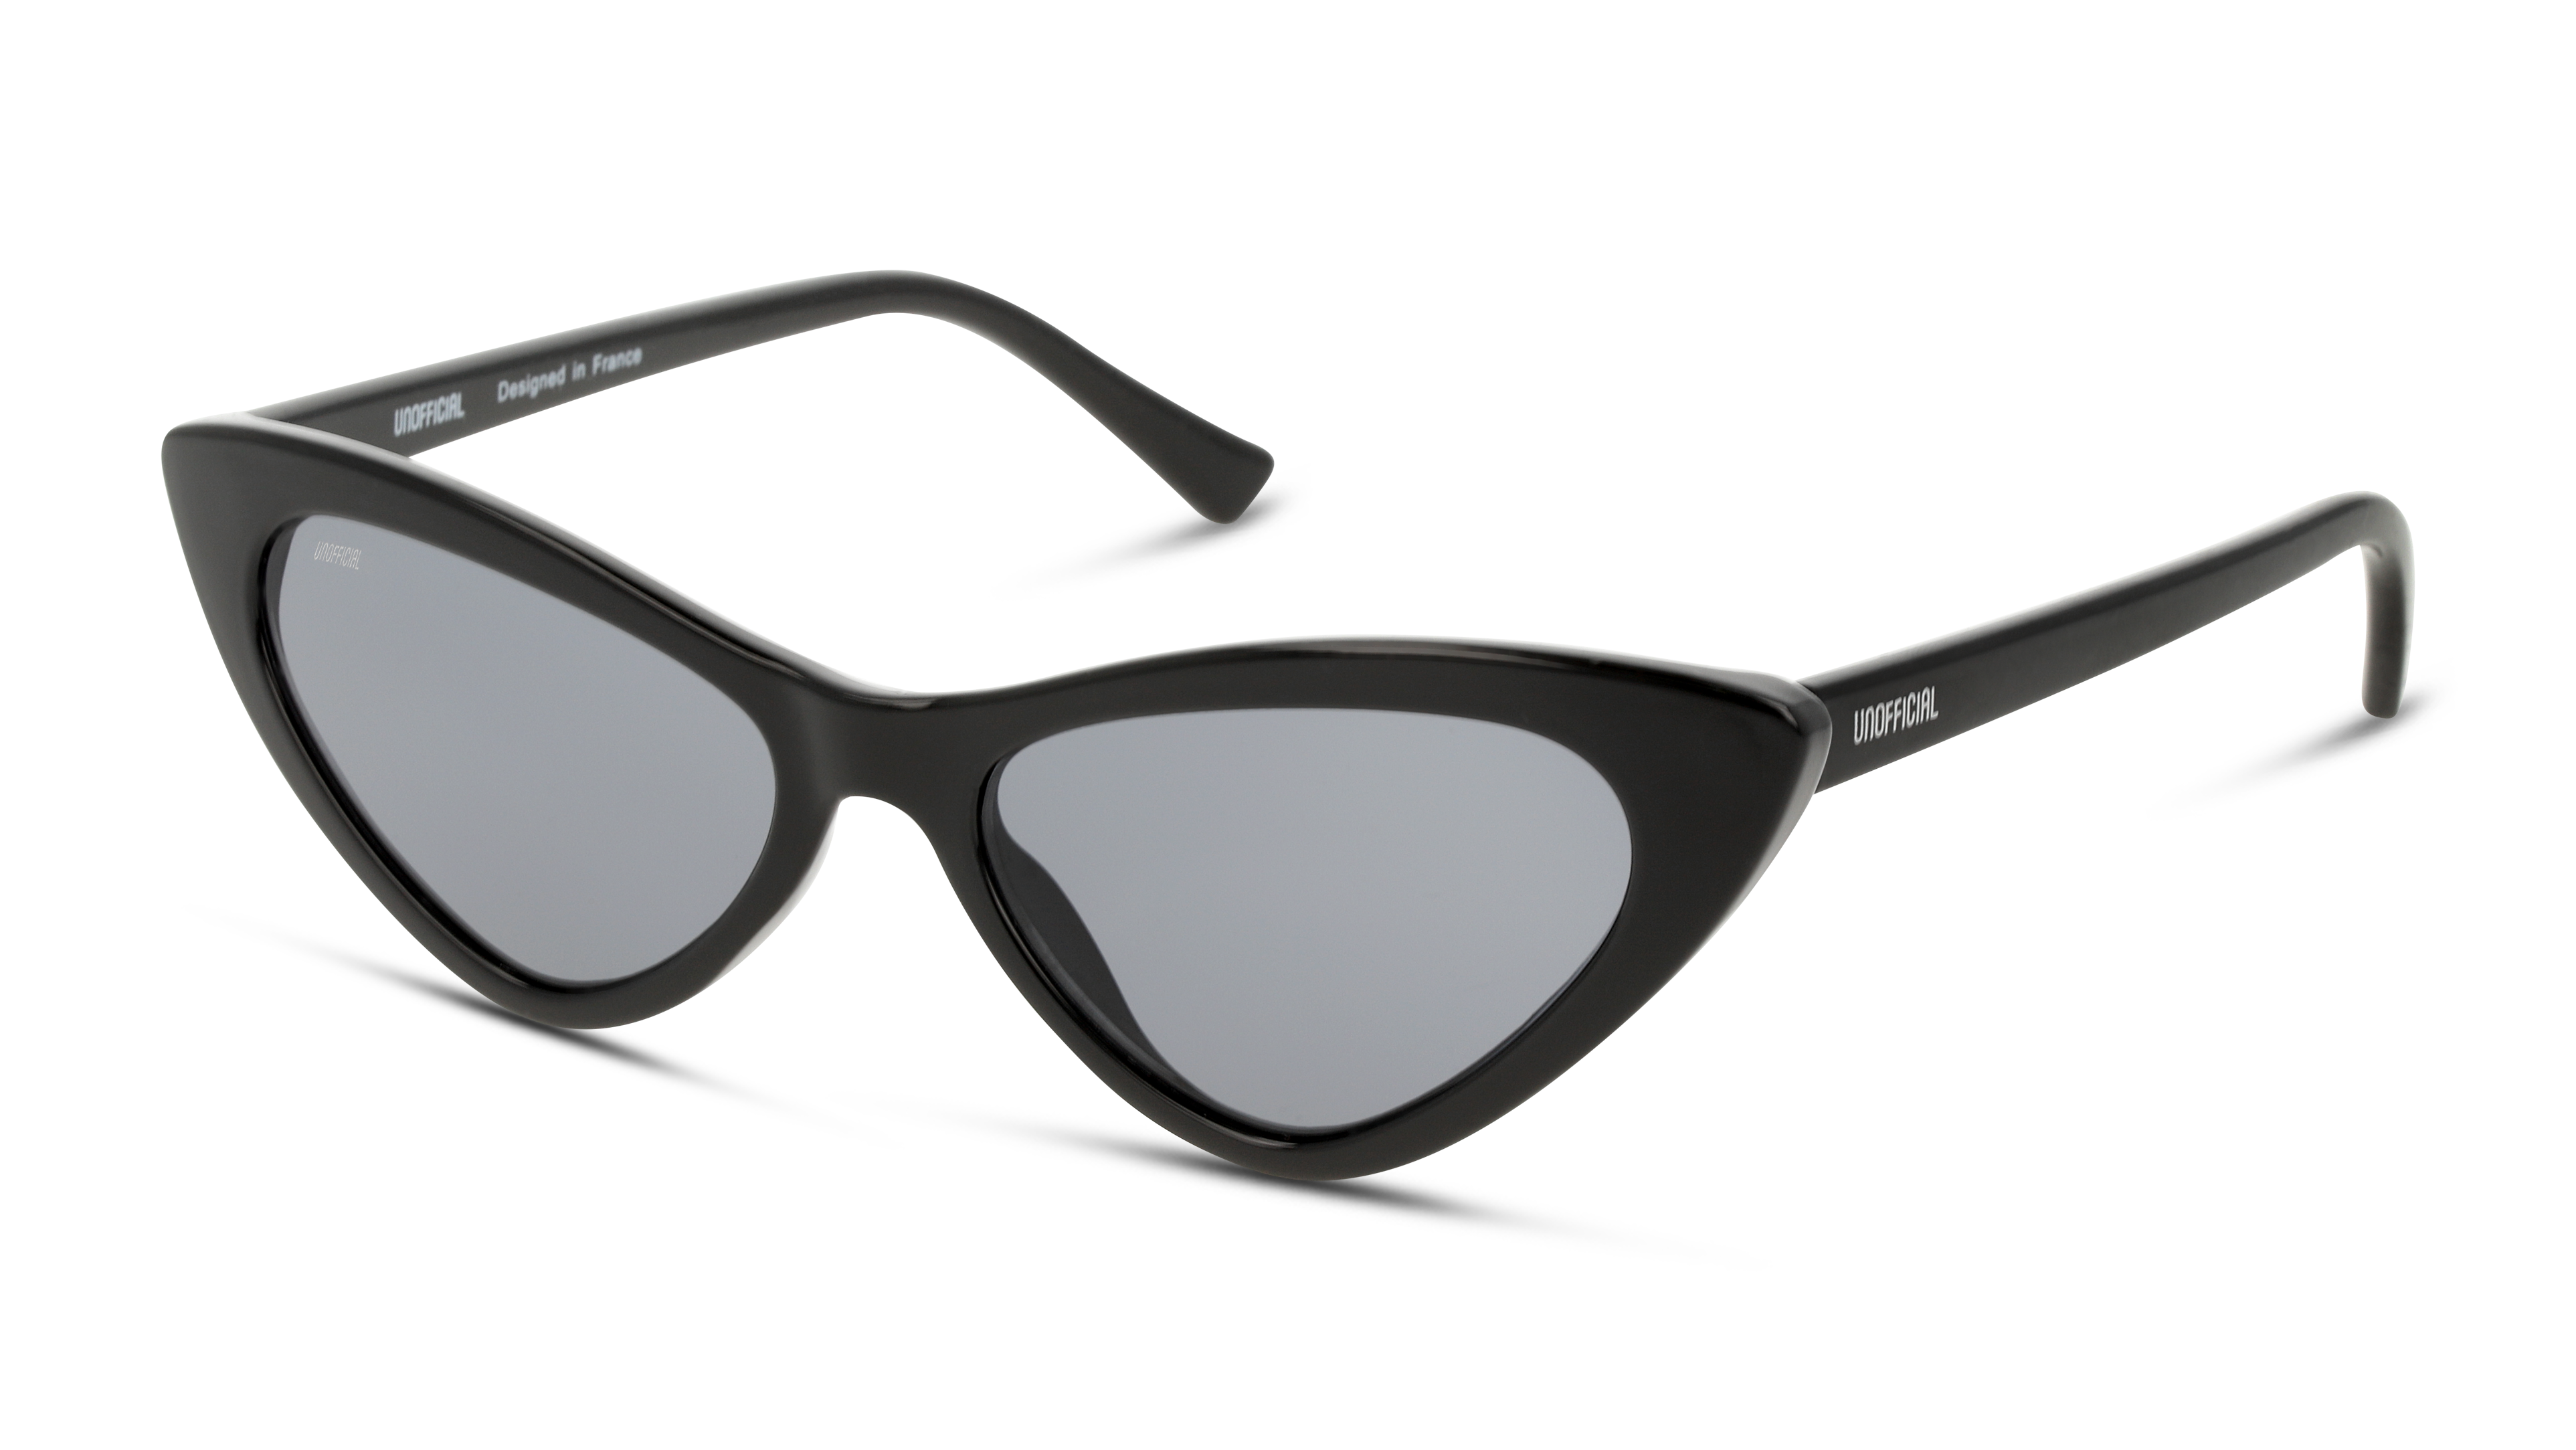 Angle_Left01 Unofficial UNSF0140 (BBG0) Sunglasses Grey / Black